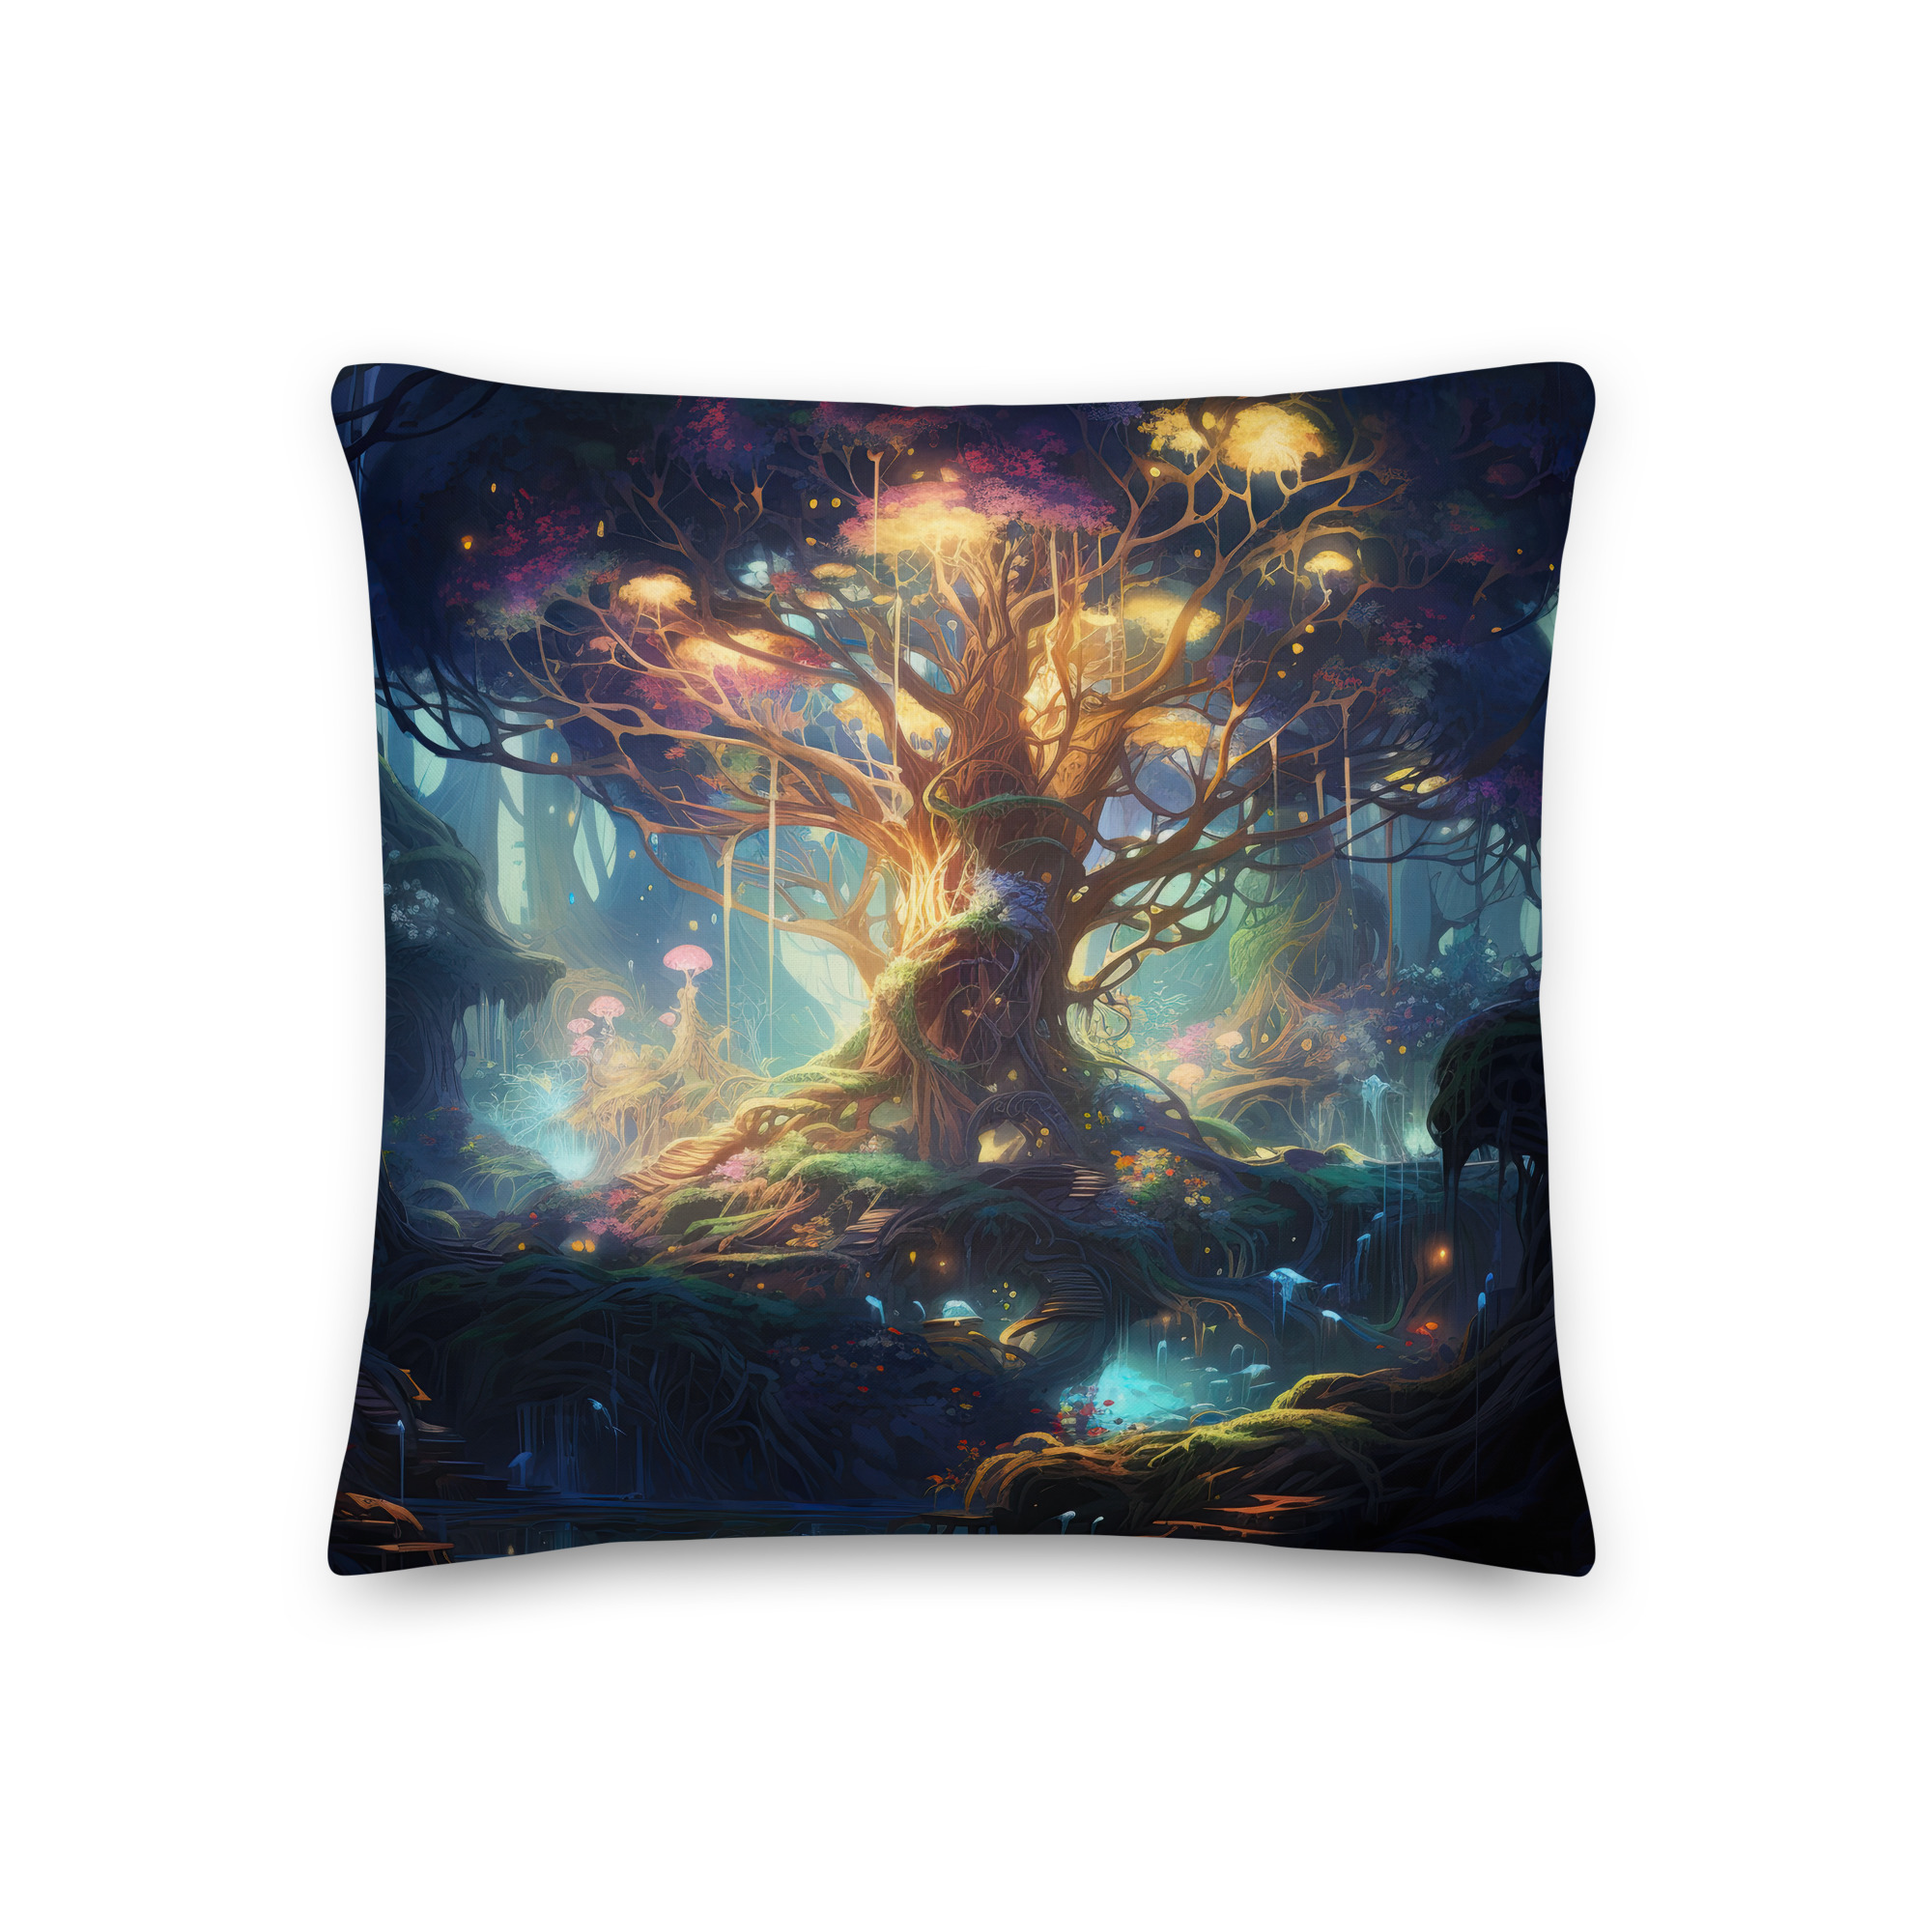 Magical Tree Kingdom Throw Pillow – 18×18